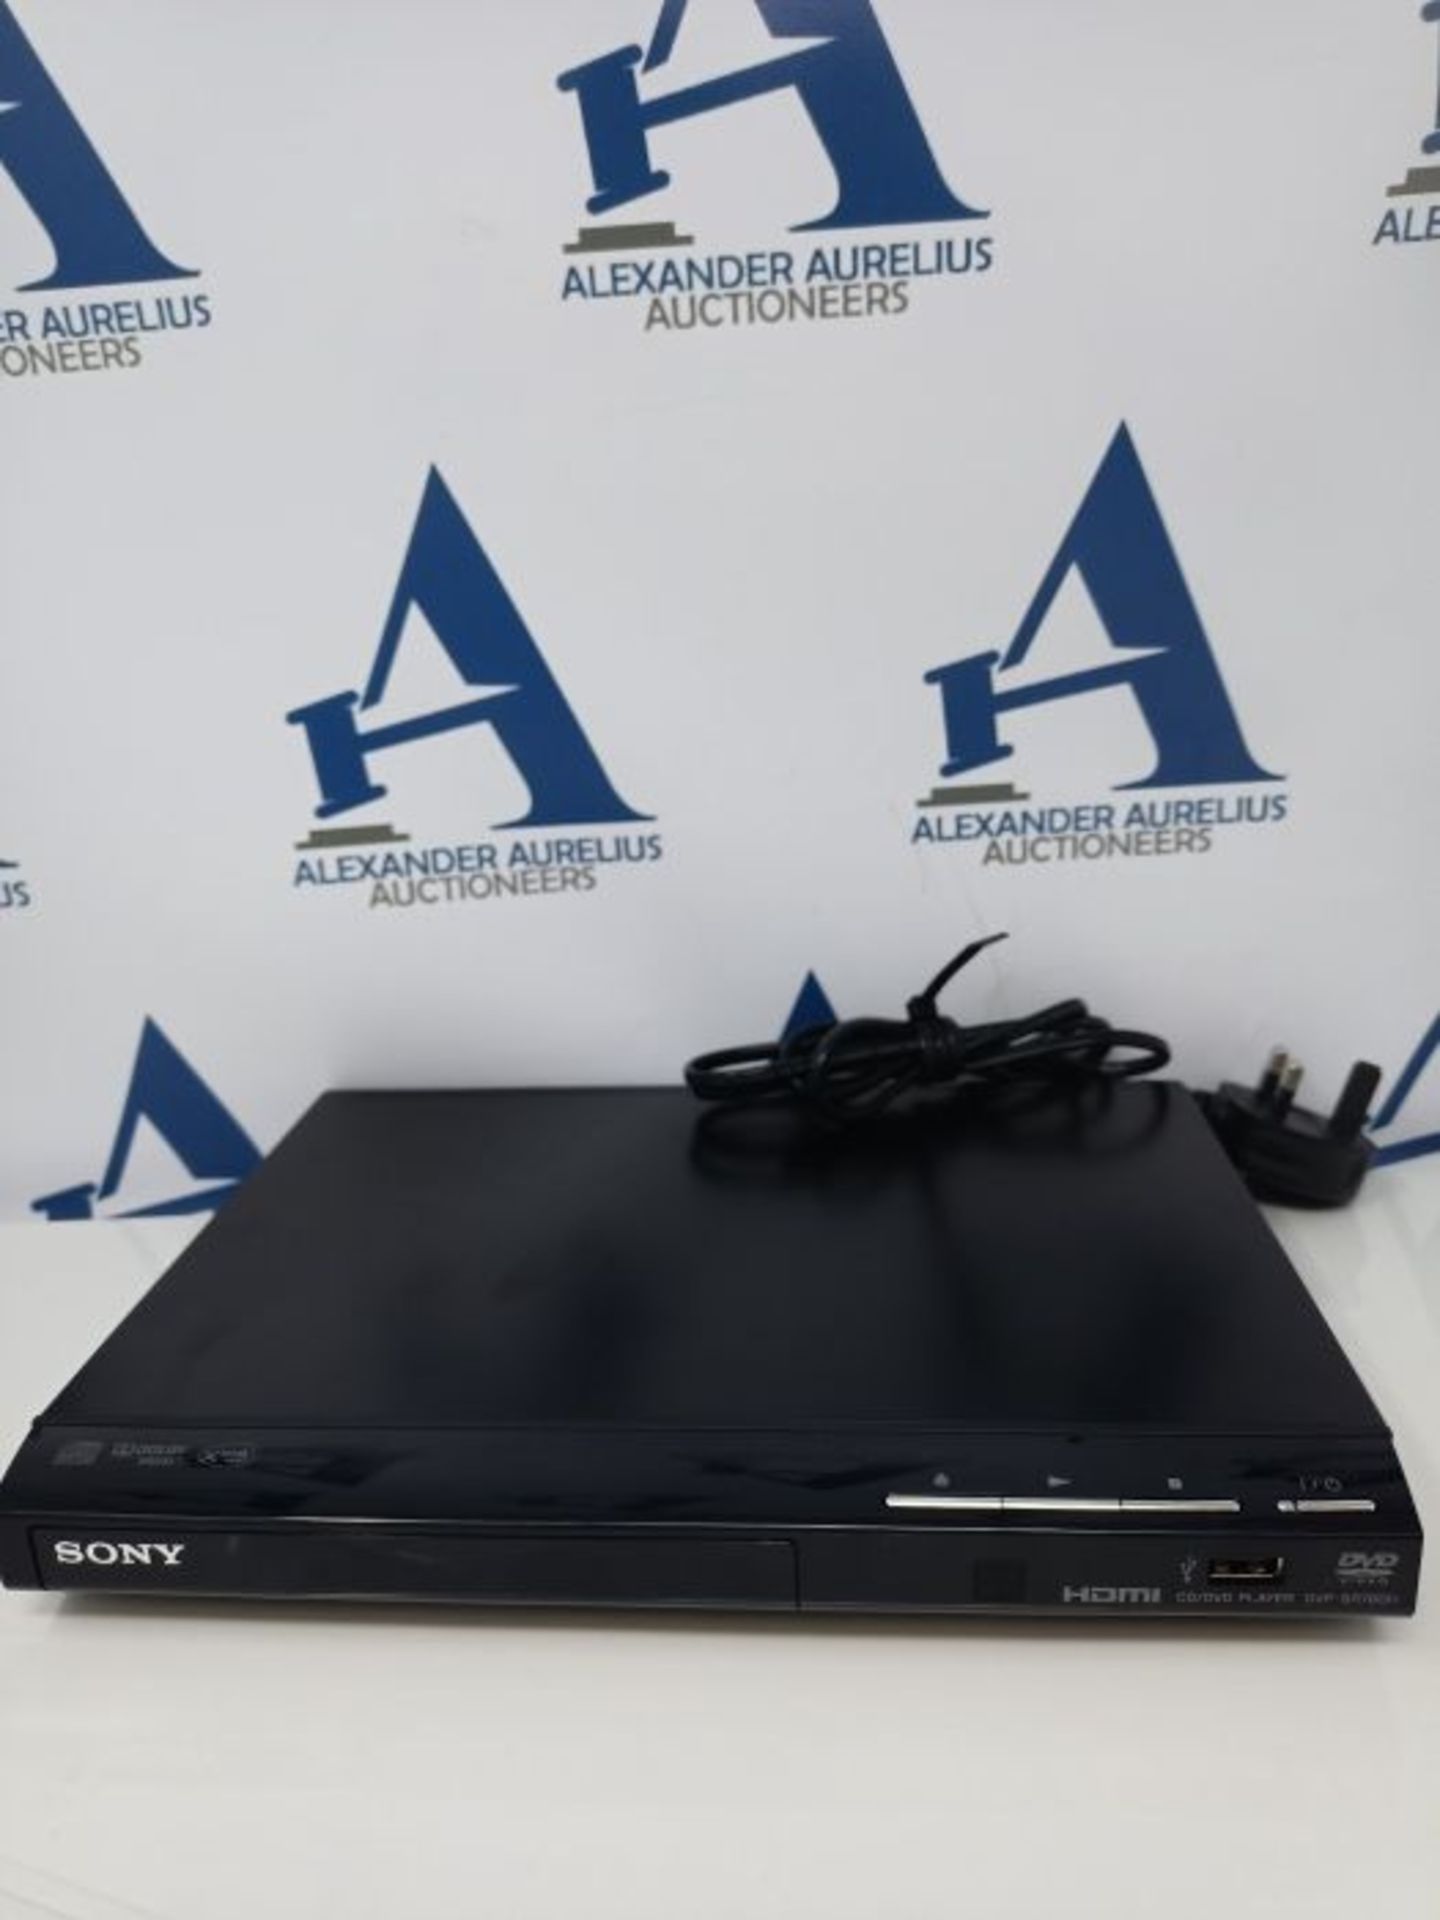 Sony DVPSR760H DVD Upgrade Player (HDMI, 1080 Pixel Upscaling, USB Connectivity), UK 3 - Image 2 of 3